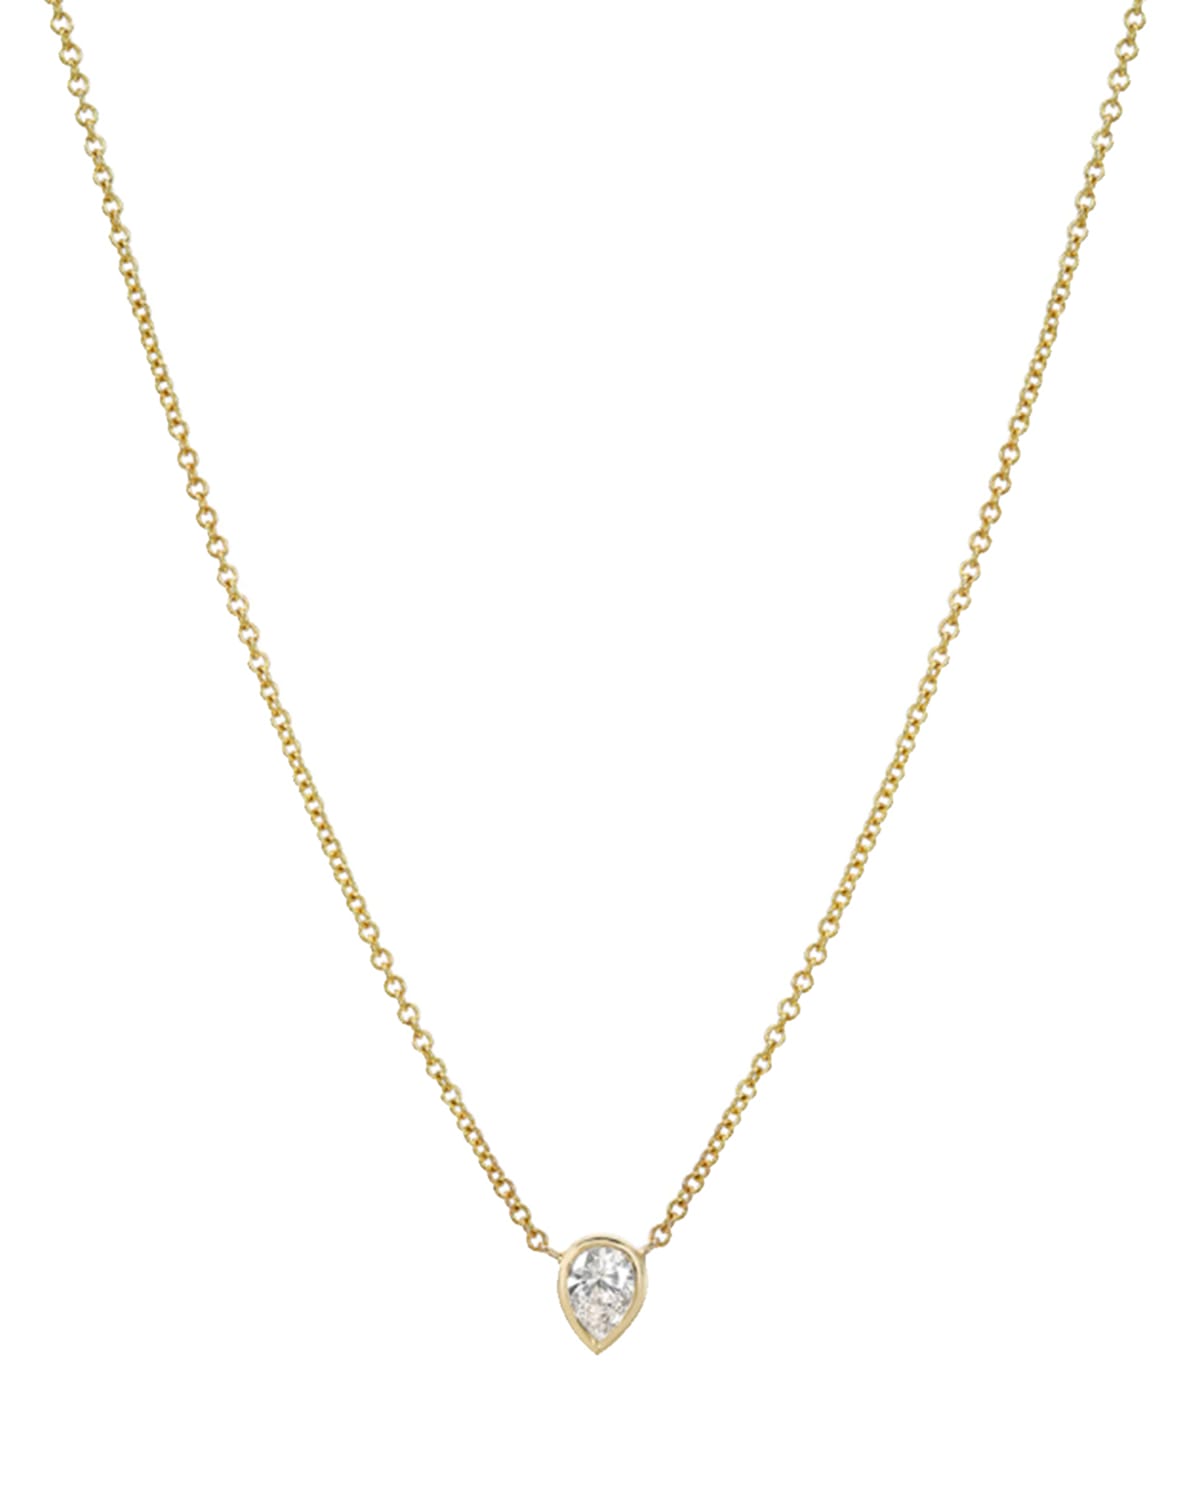 Zoe Lev Jewelry 14k Yellow Gold Pear Diamond Bezel Necklace